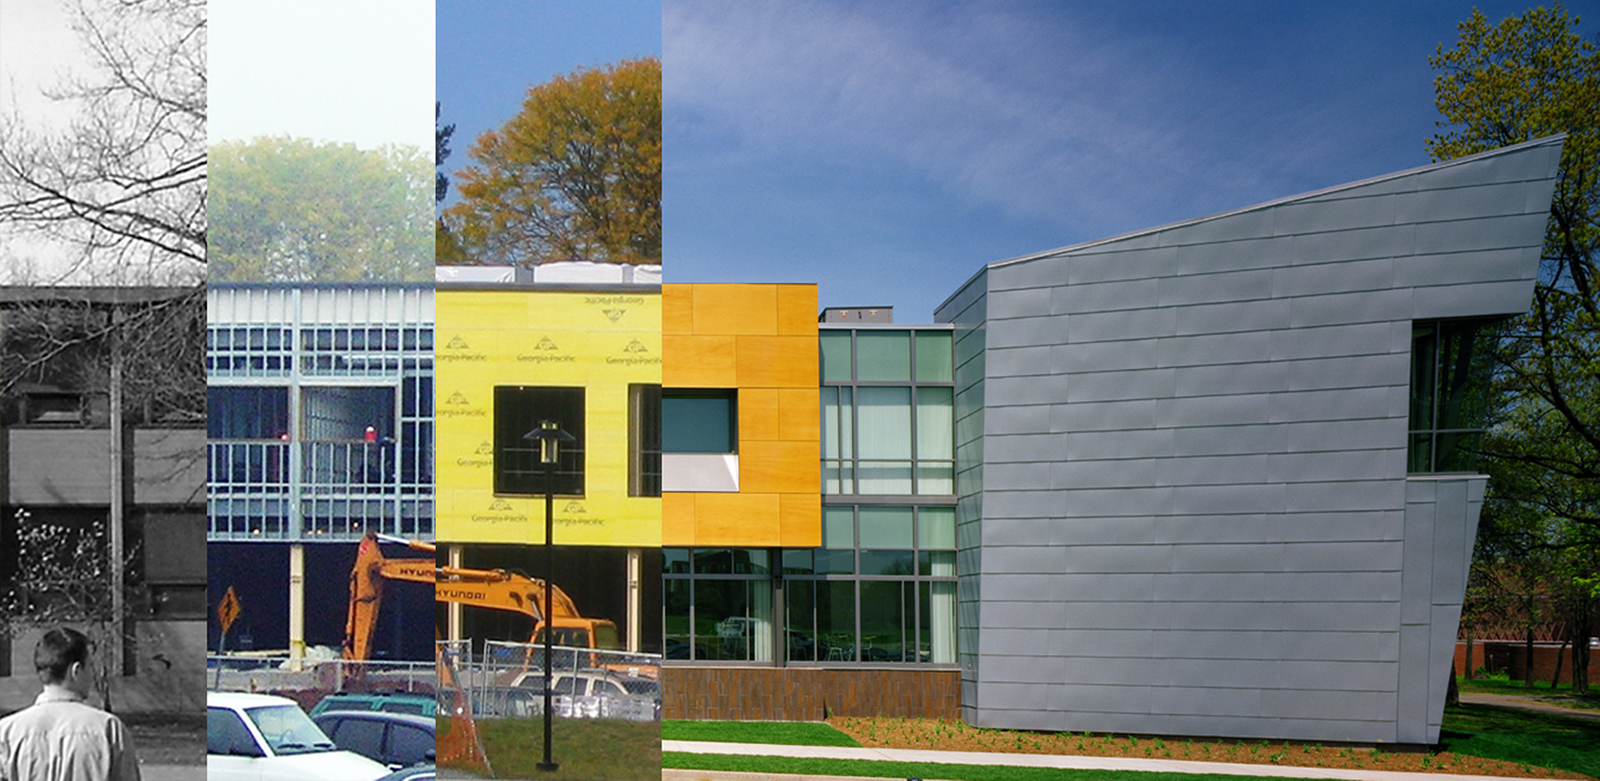 University of Hartford, Renee Samuels Arts and Technology Center